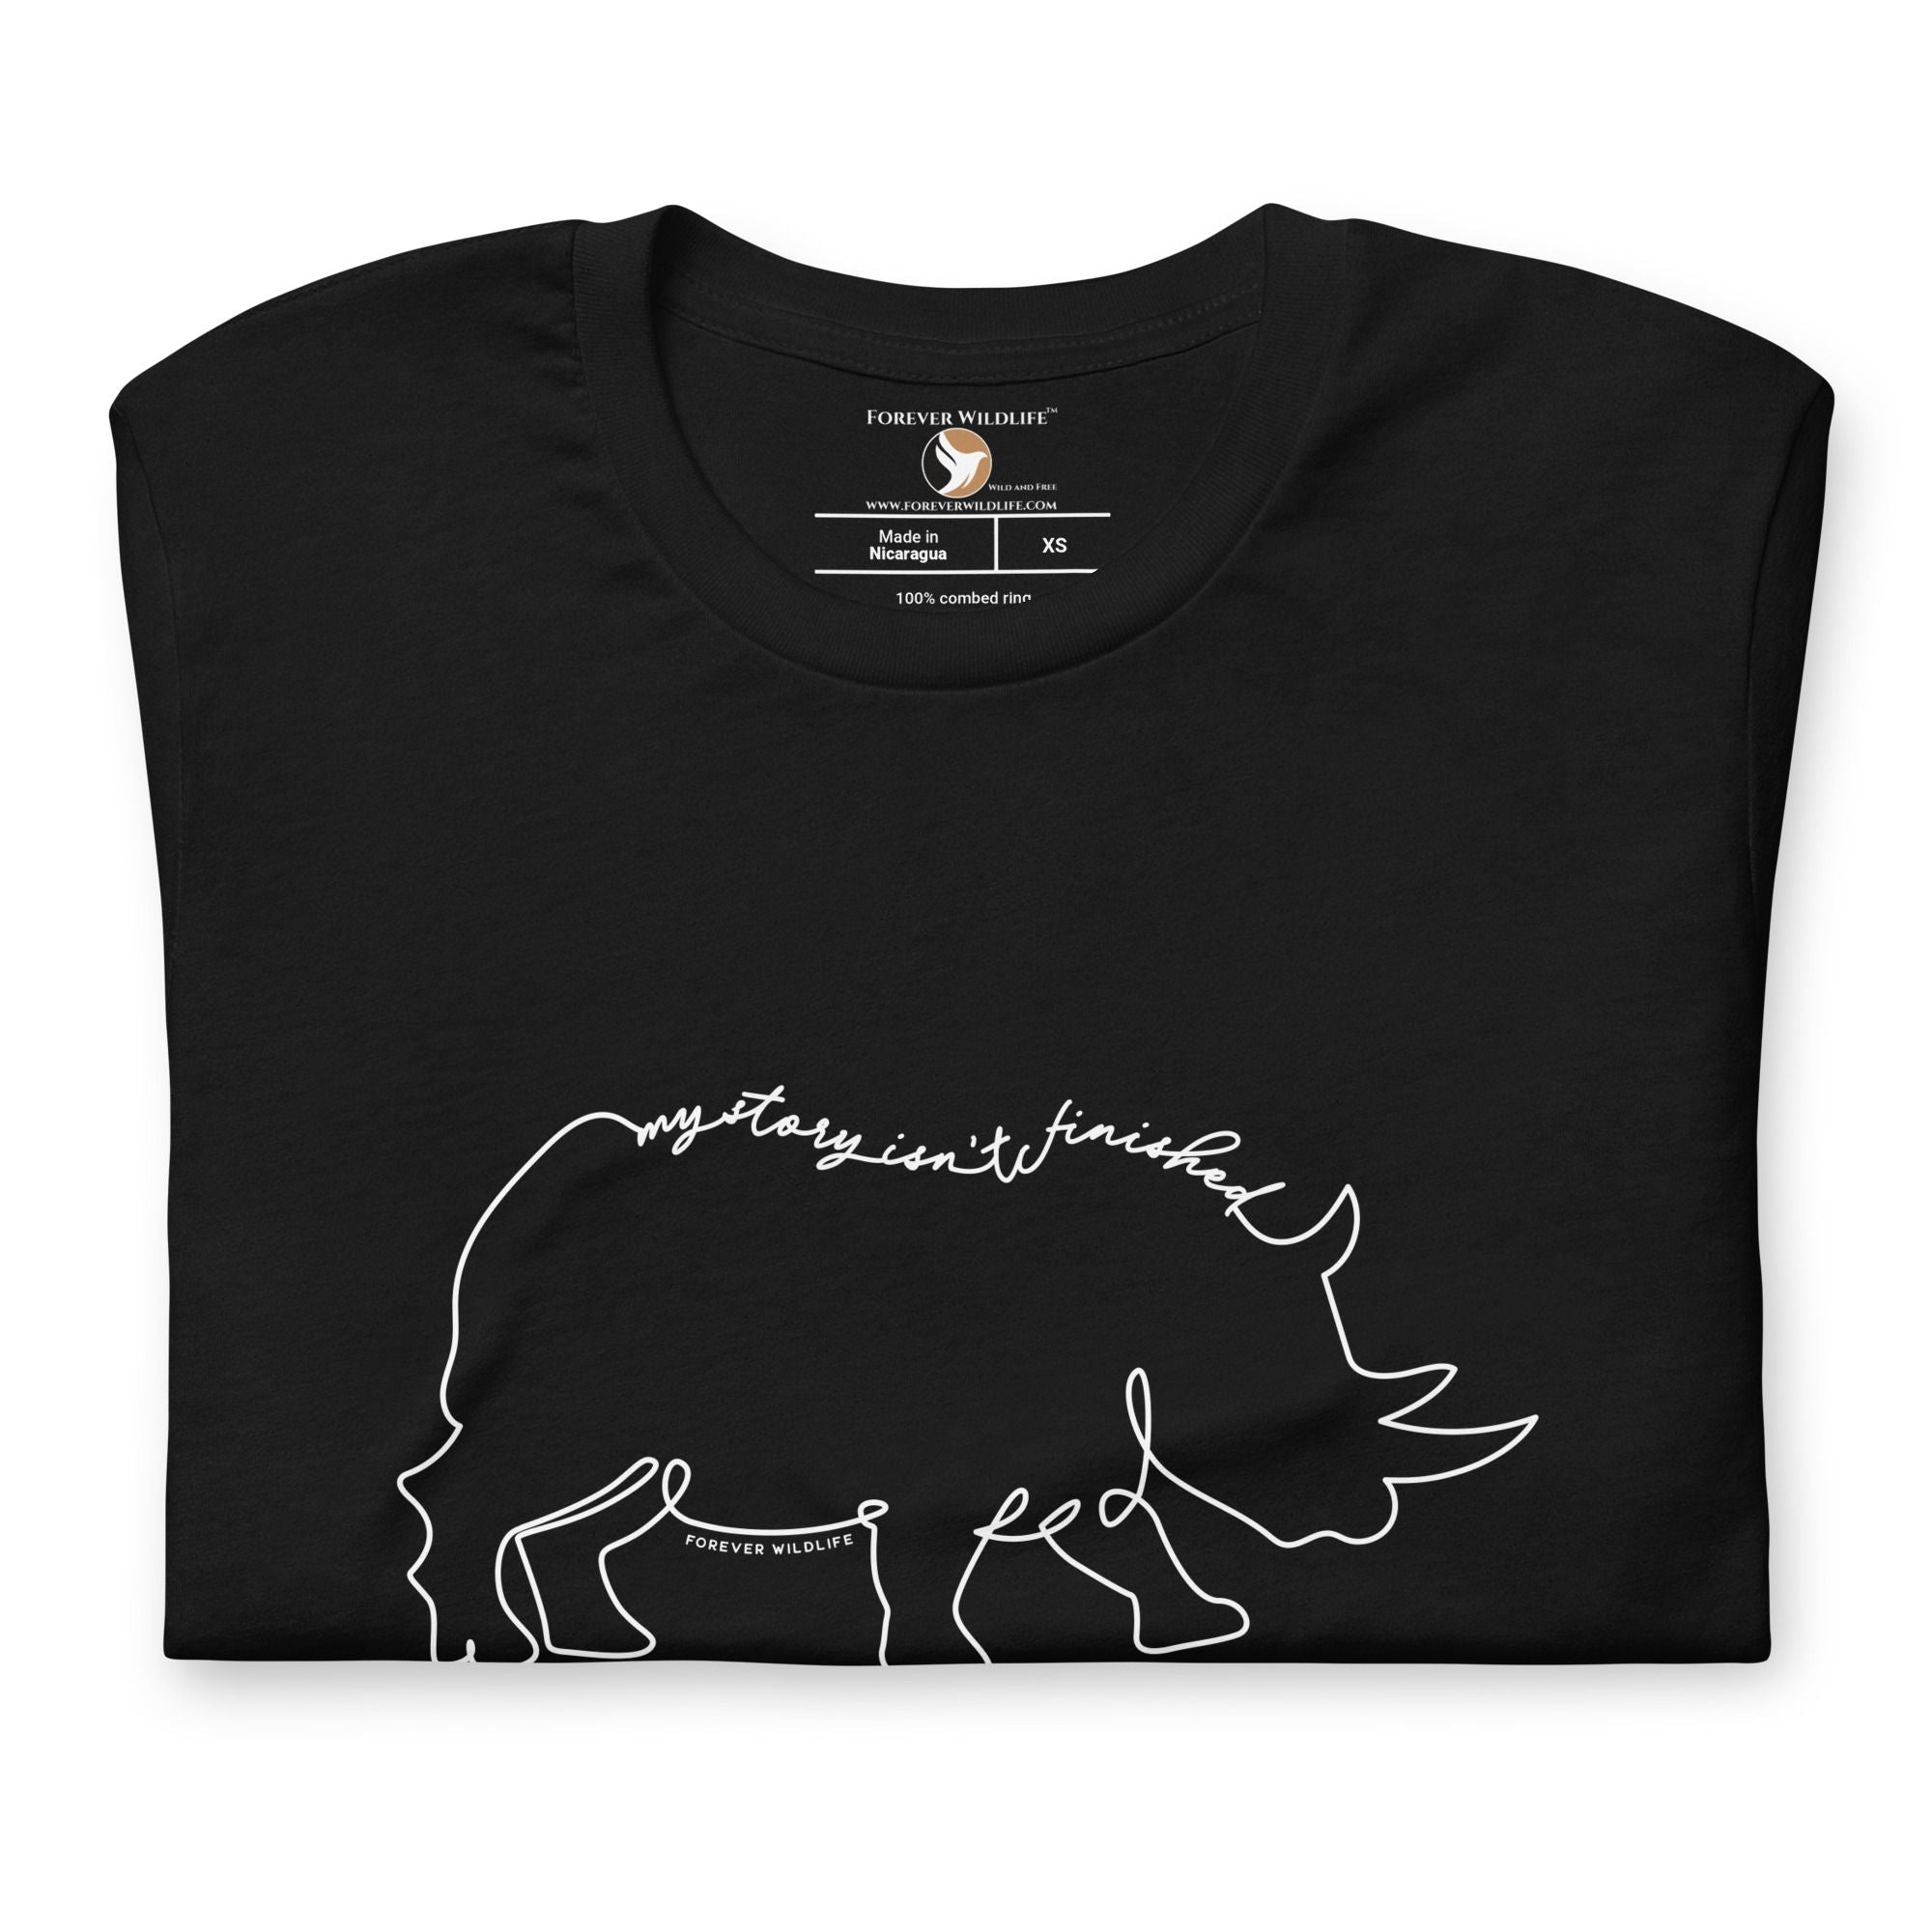 Rhino T-Shirt in Black – Premium Wildlife T-Shirt Design with My Story Isn't Finished Text, Rhino Shirts and Wildlife Clothing